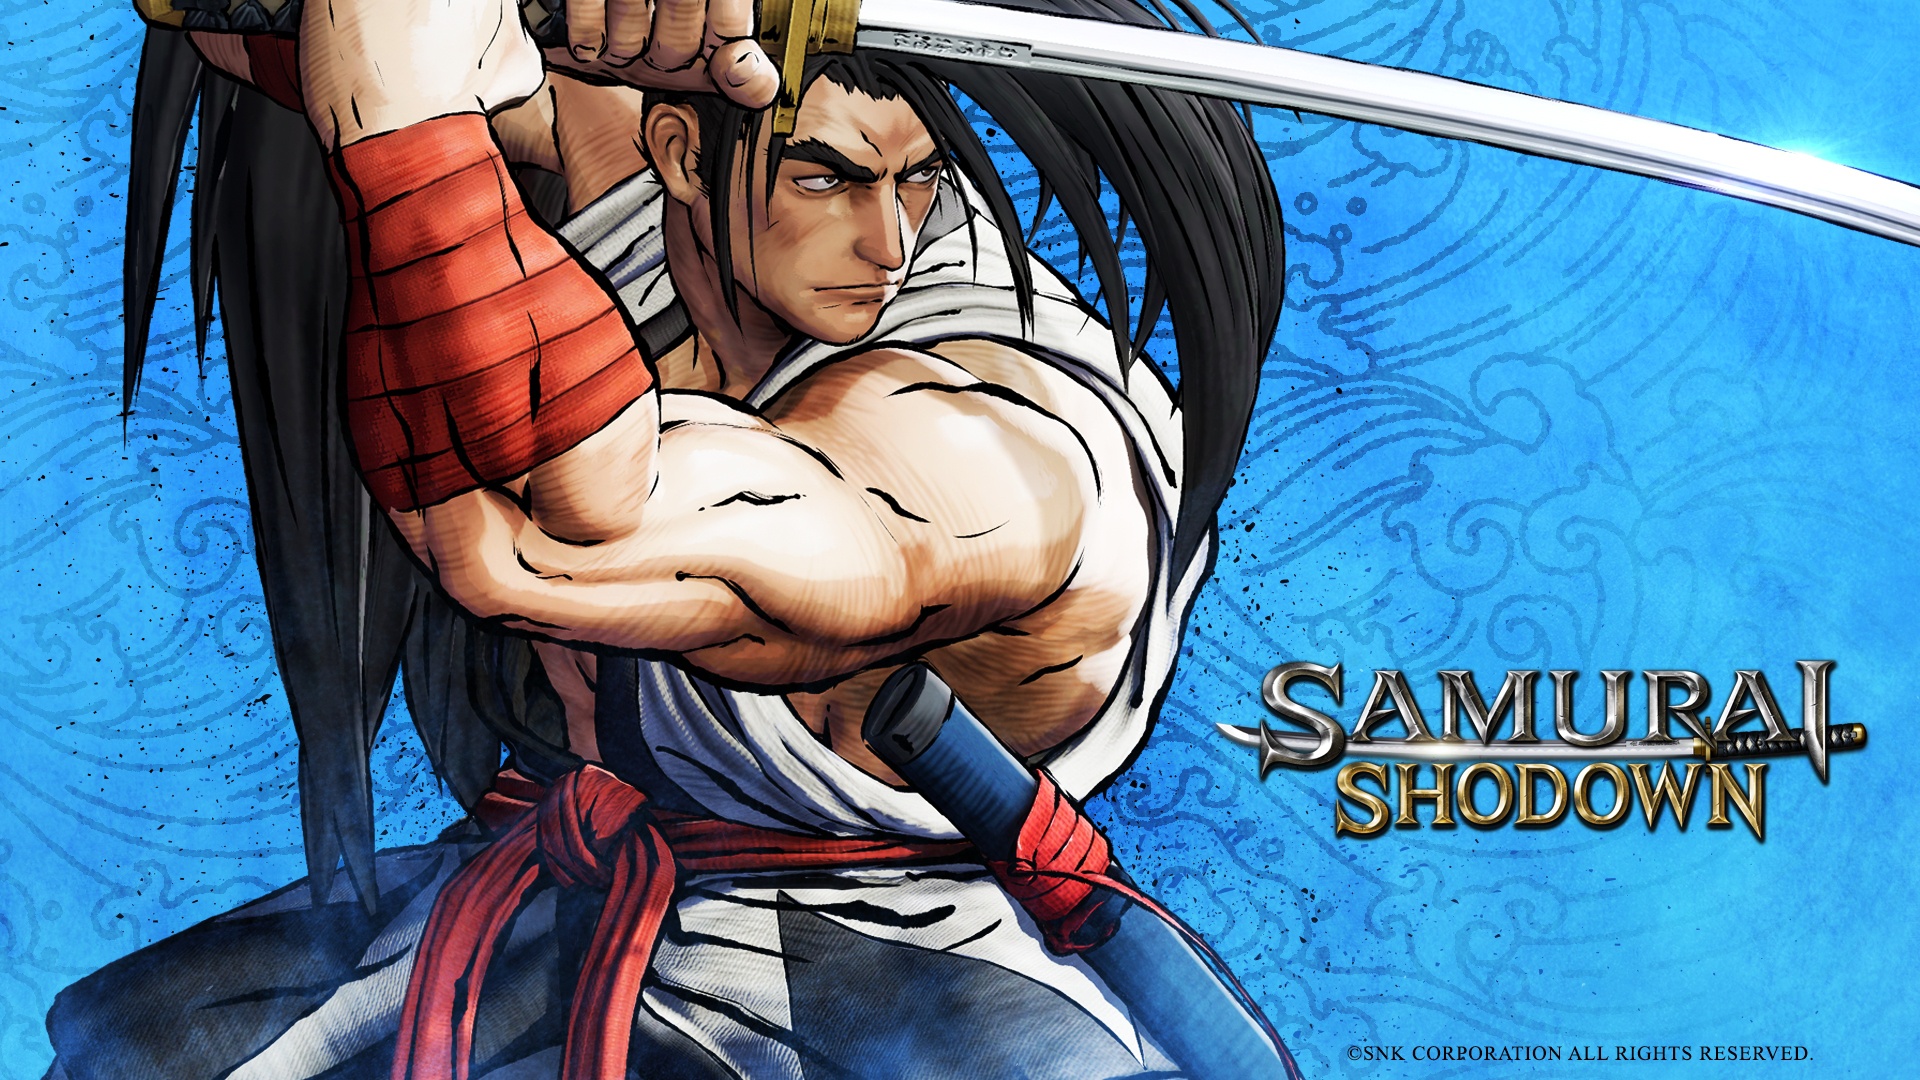 Samurai Shodown เตรียมวางจำหน่ายบน Epic Games Store ในช่วงฤดูใบไม้ผลินี้ พร้อมเผยสเปกความต้องการ